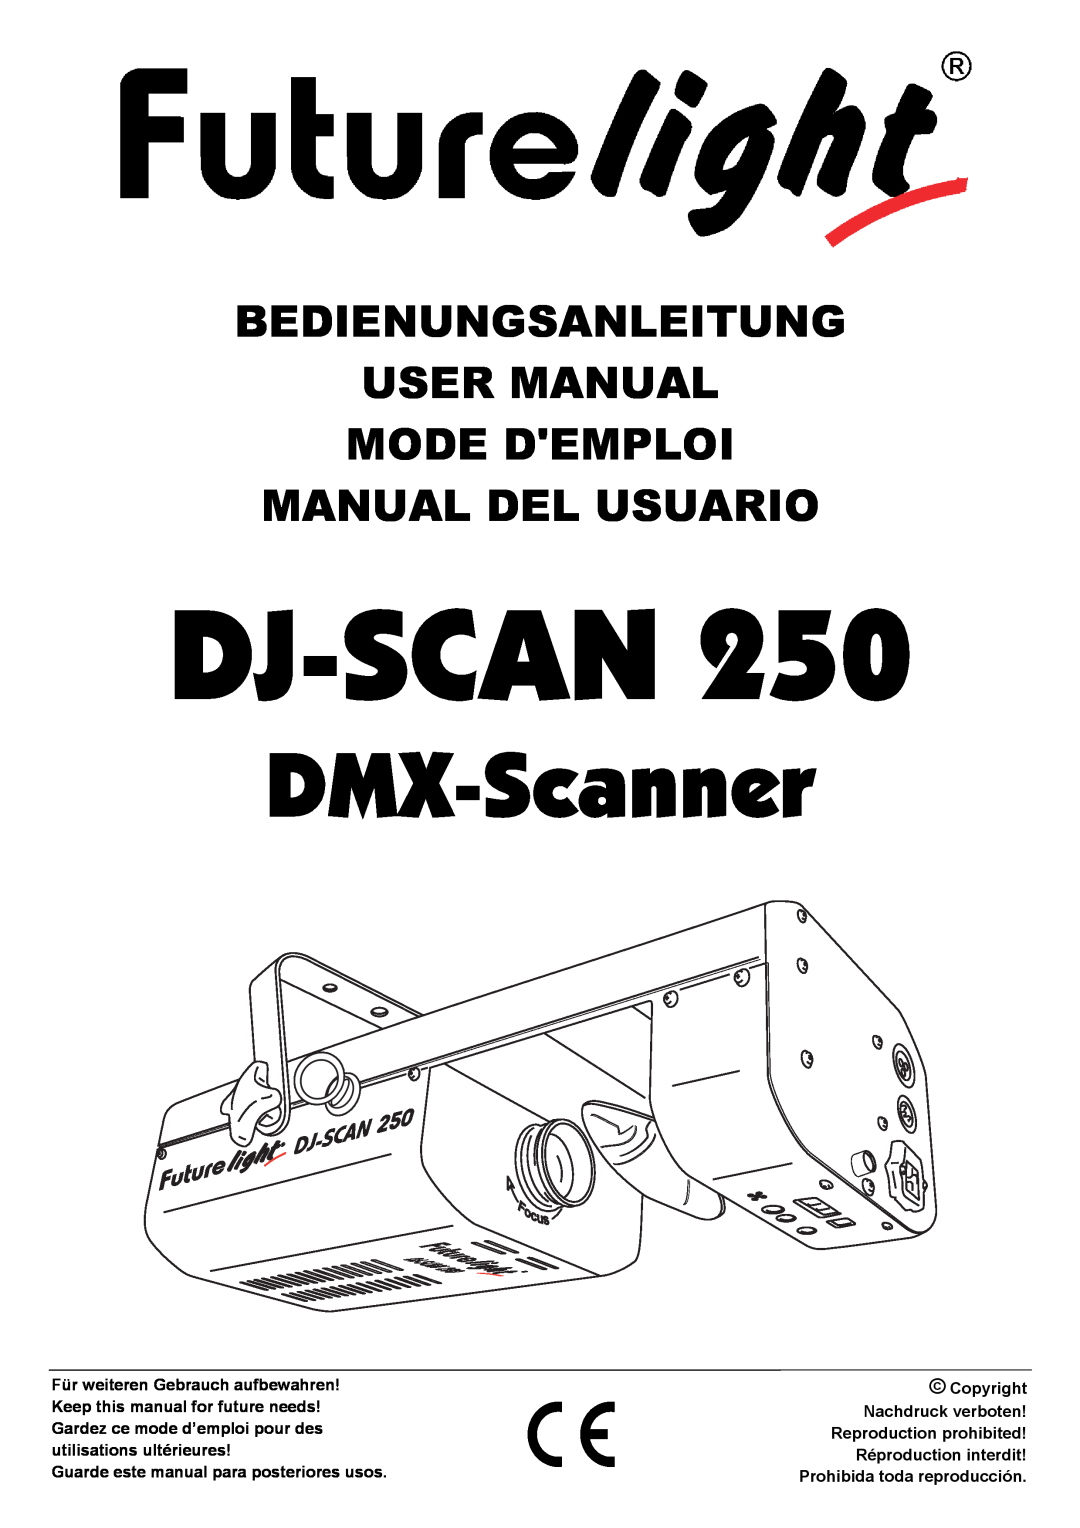 Futuretech 250 user manual Dj-Scan, DMX-Scanner, Bedienungsanleitung User Manual Mode Demploi Manual Del Usuario 